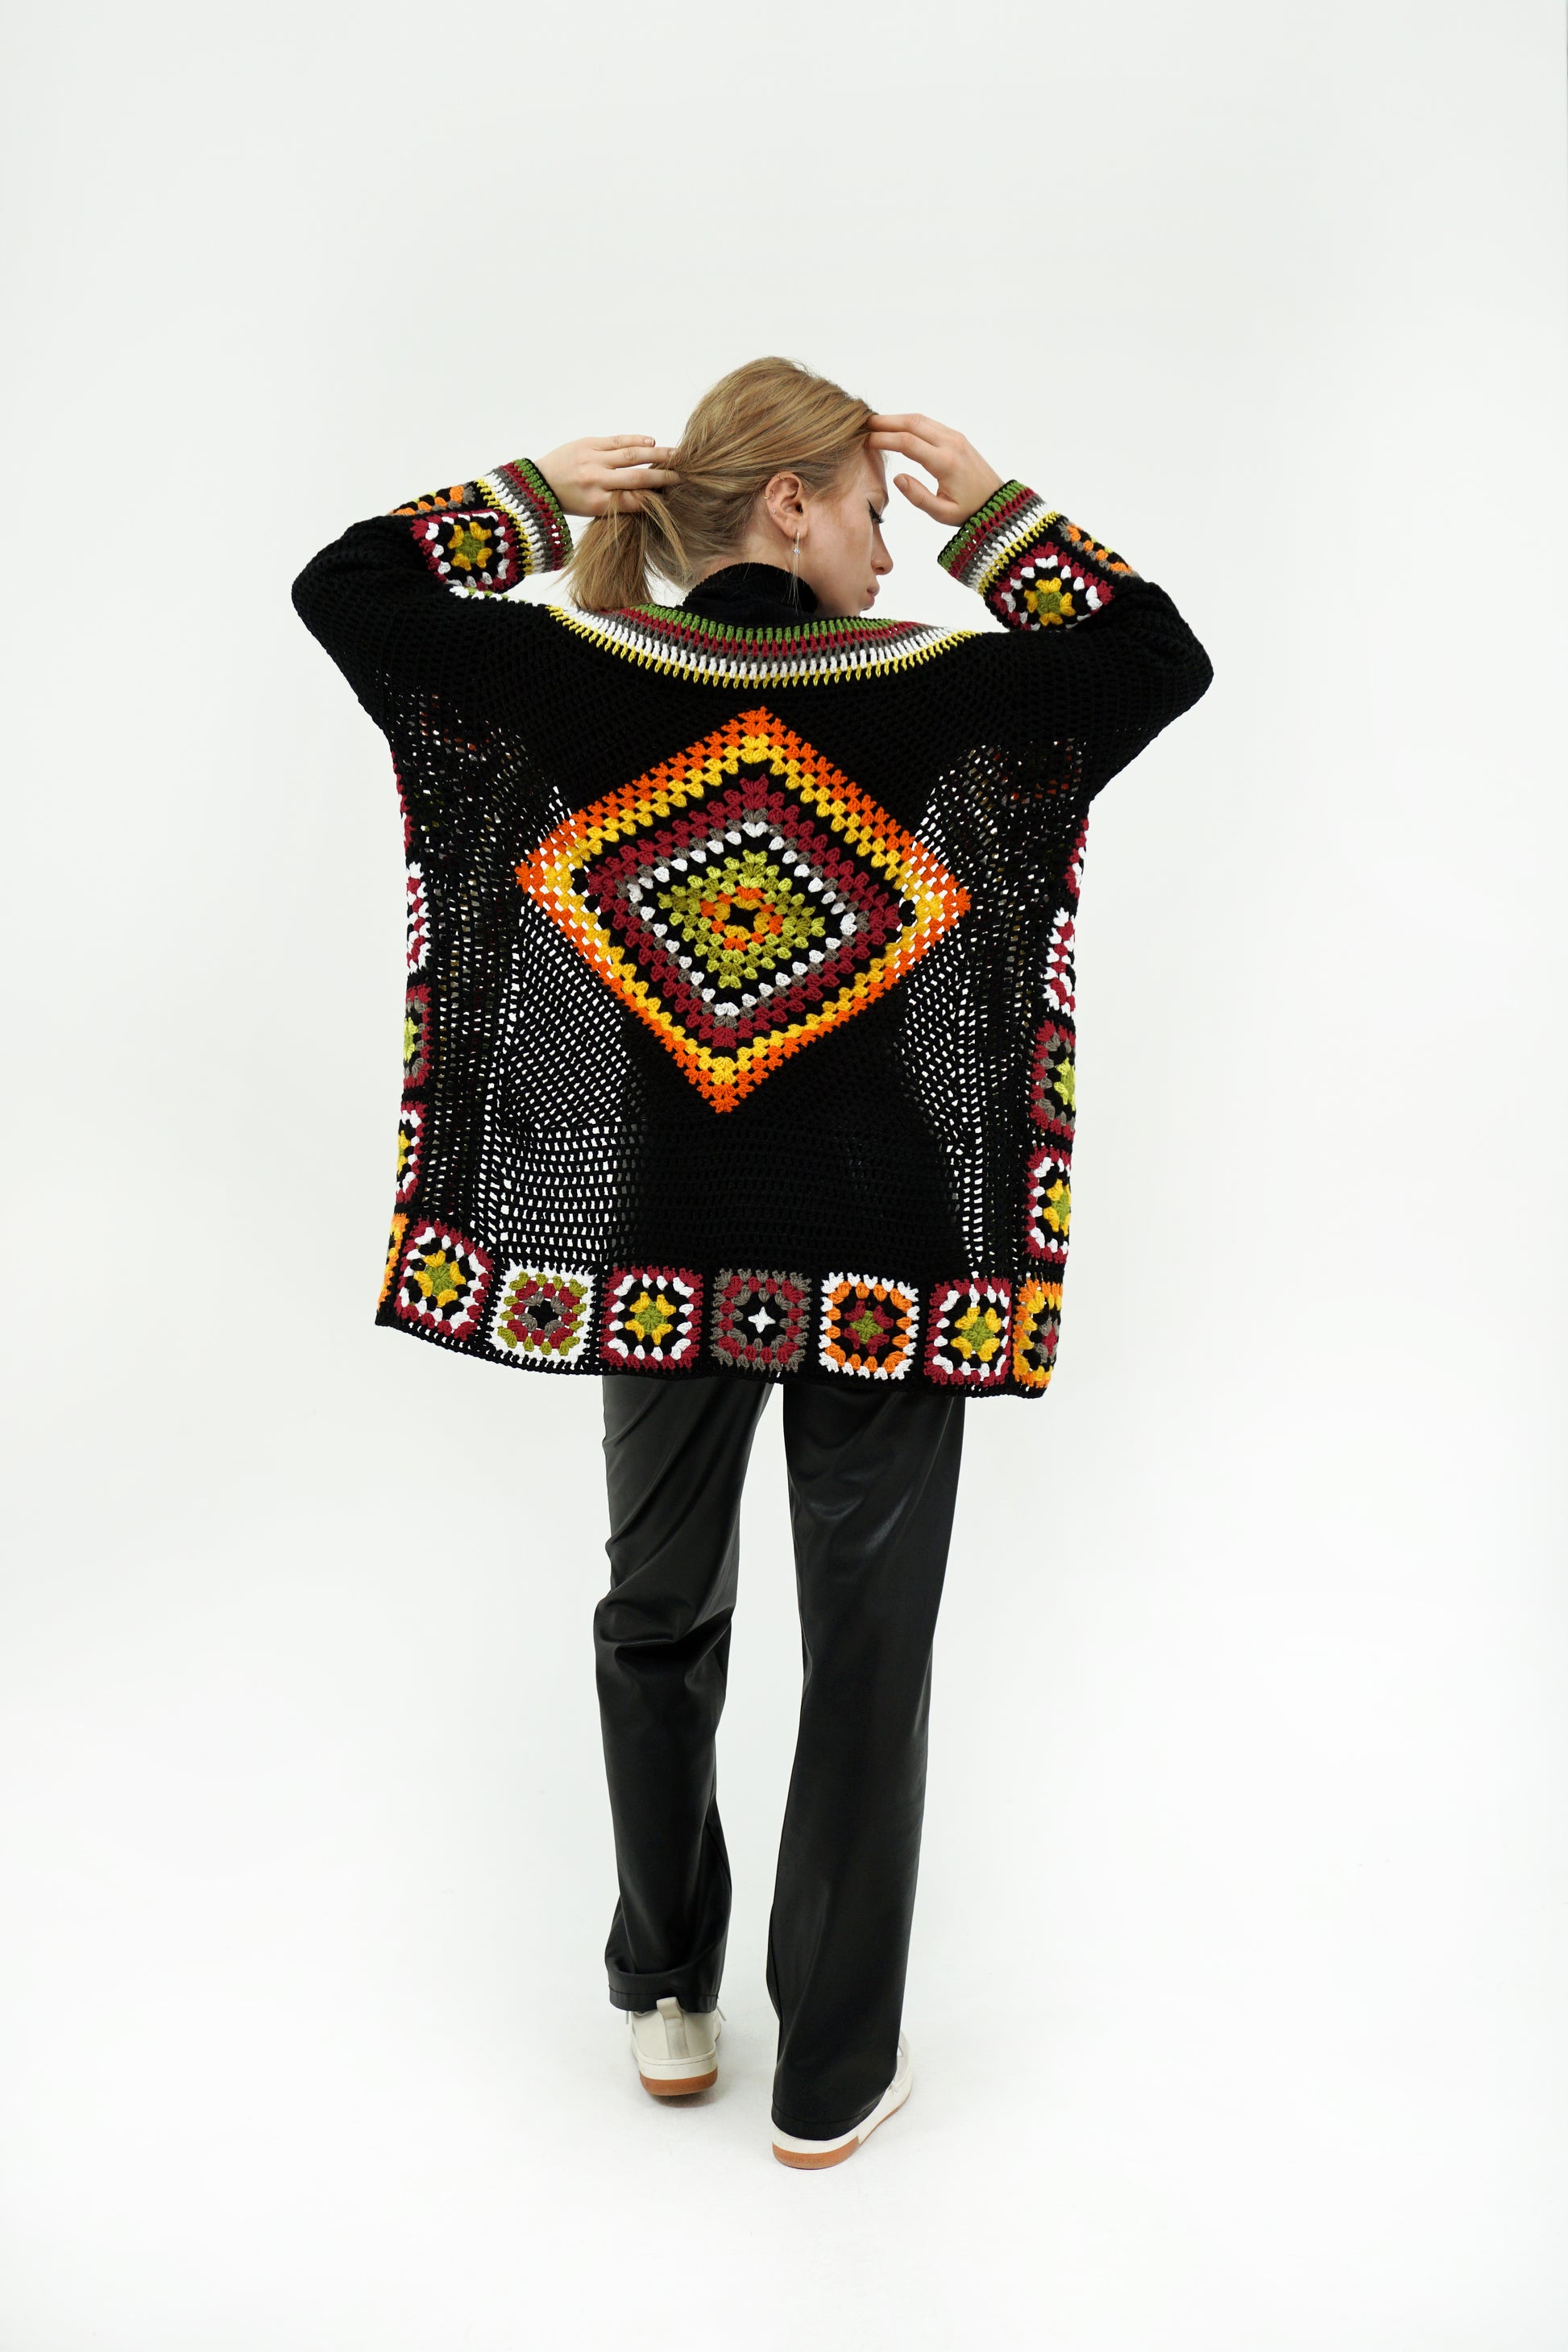 10 Giselle  Handmade Crochet Cardigan with Granny Square Design - Wuitusu